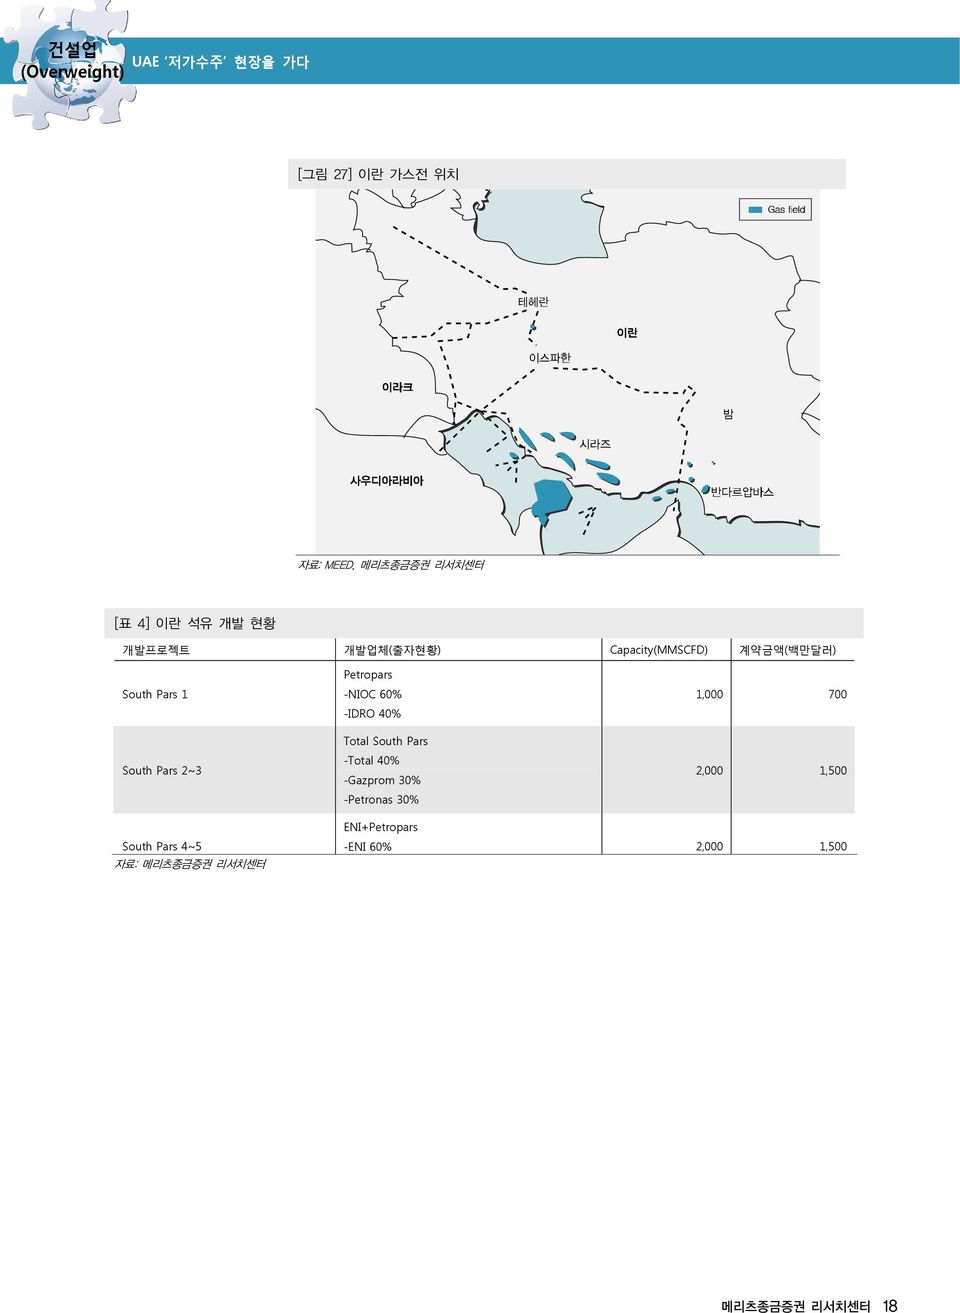 Petropars -NIOC 6% -IDRO 4% Total South Pars -Total 4% -Gazprom 3%